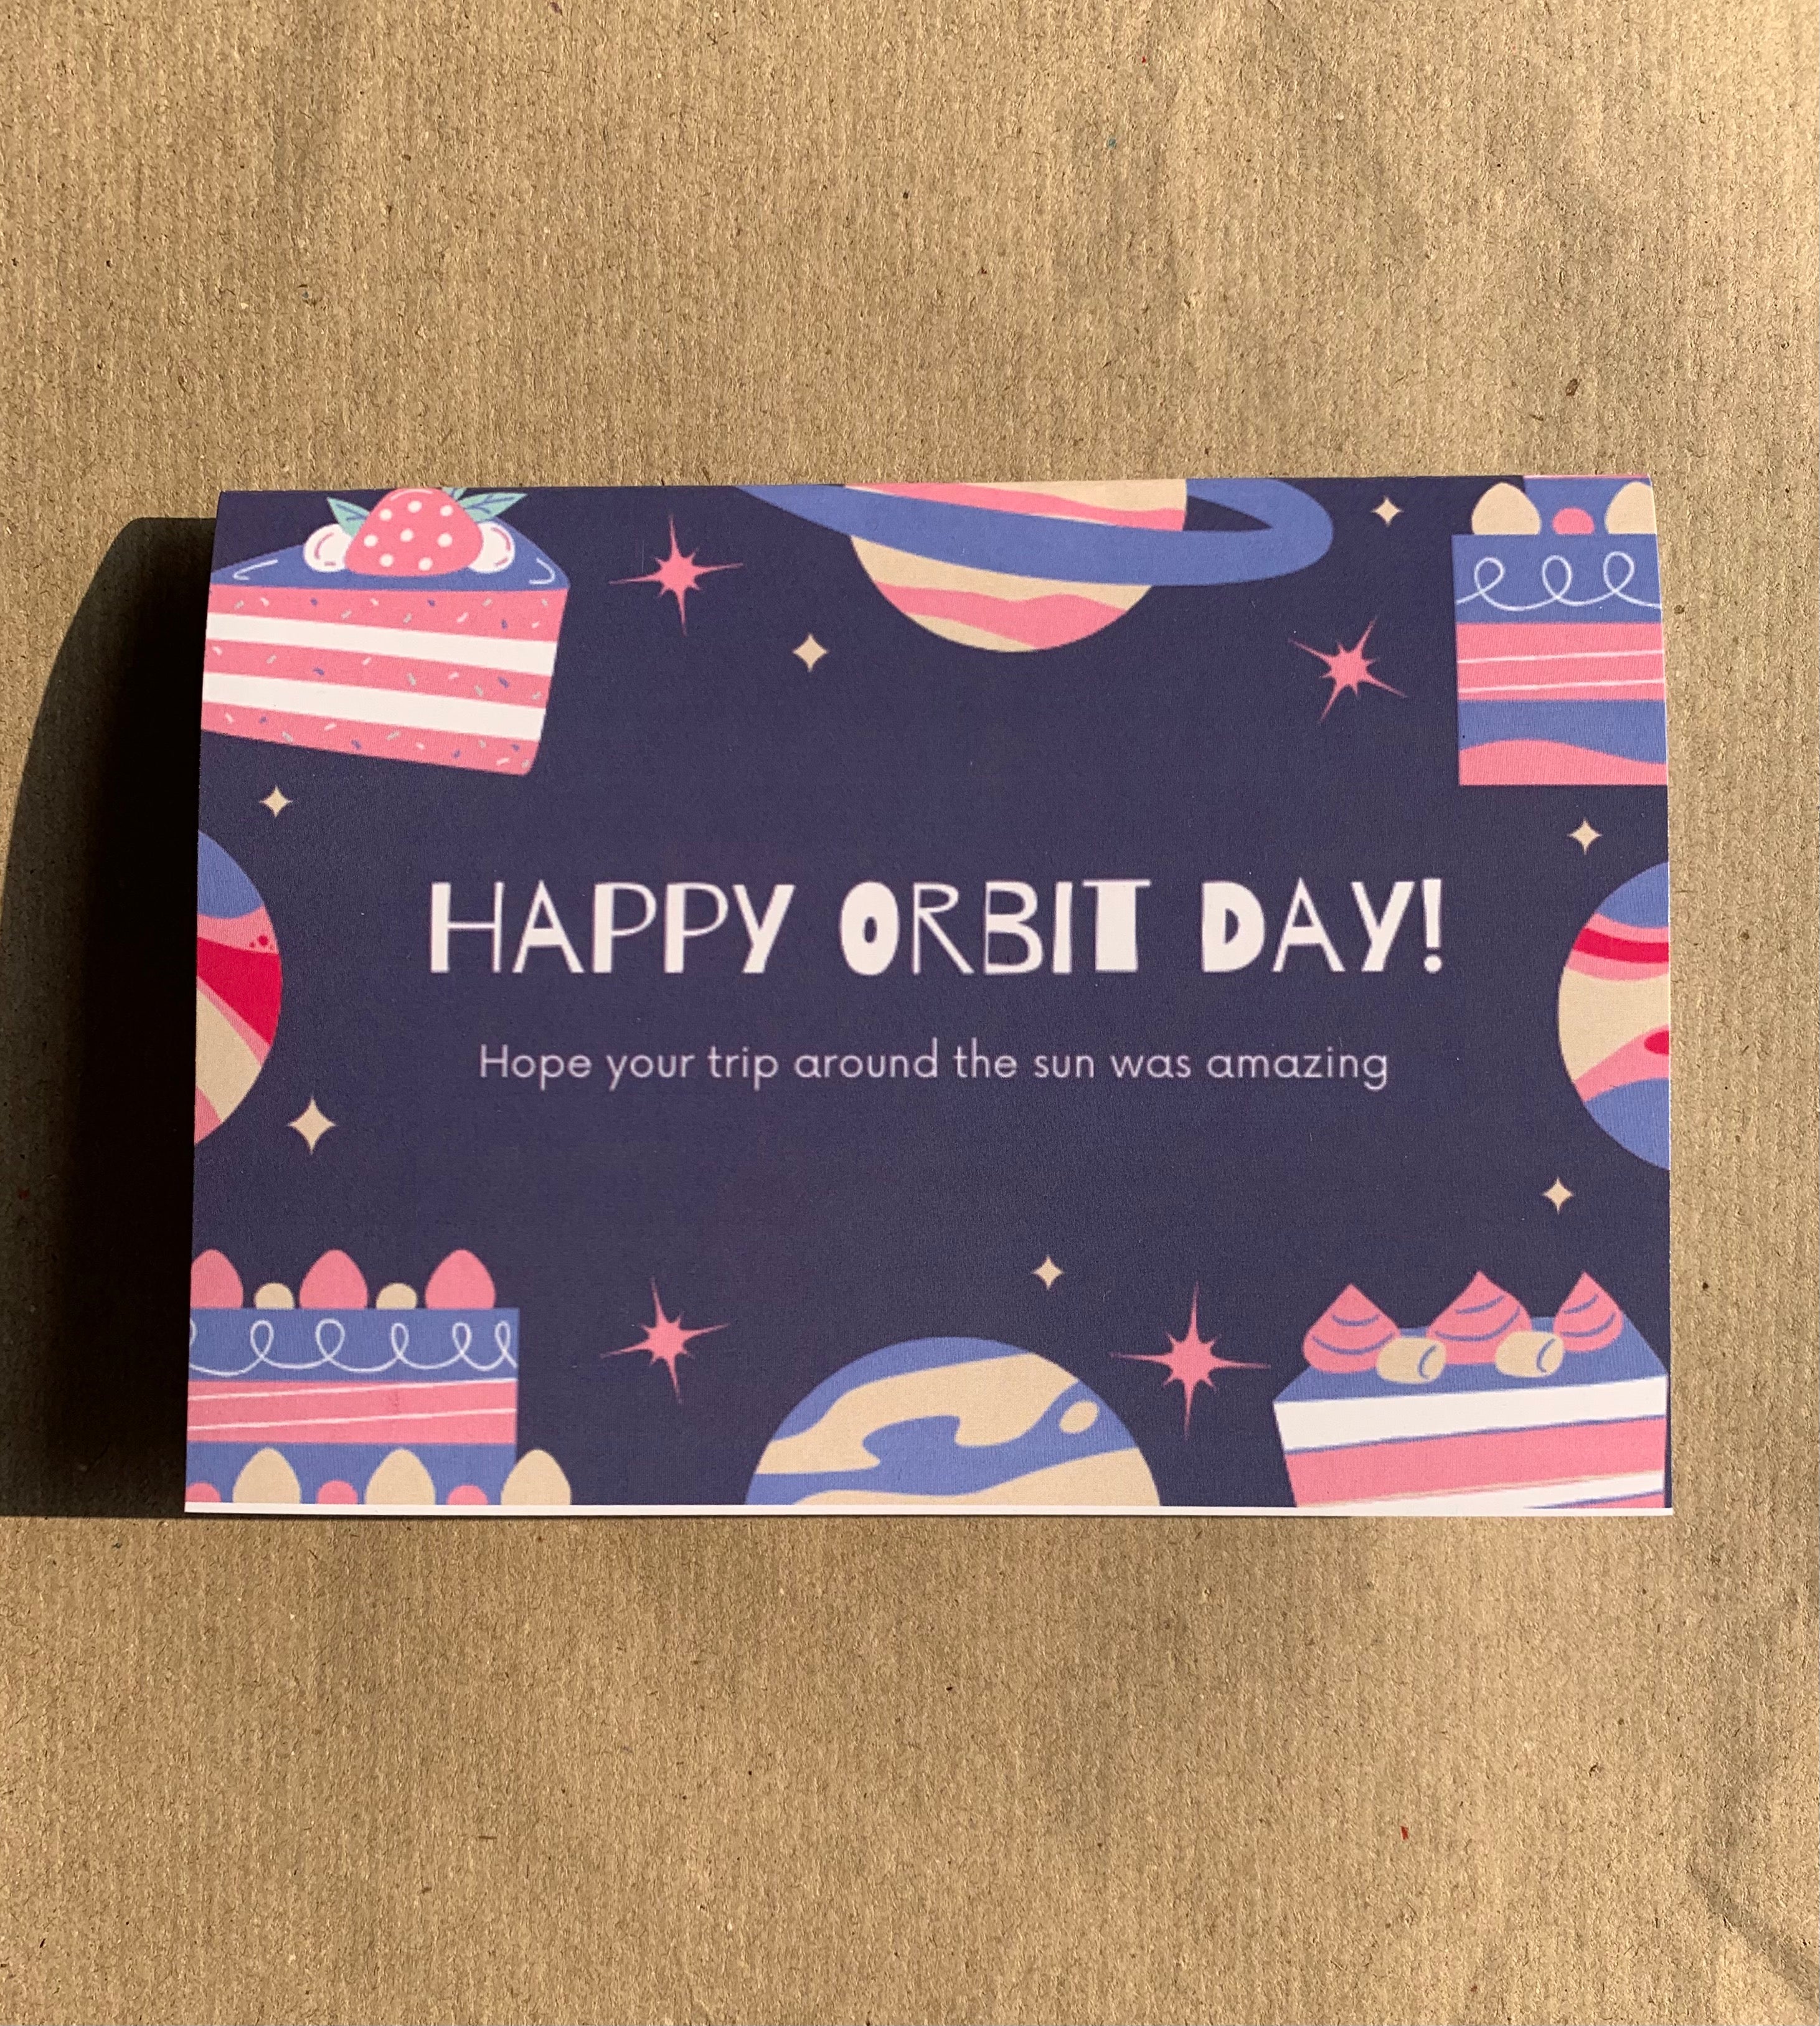 Happy orbit day card